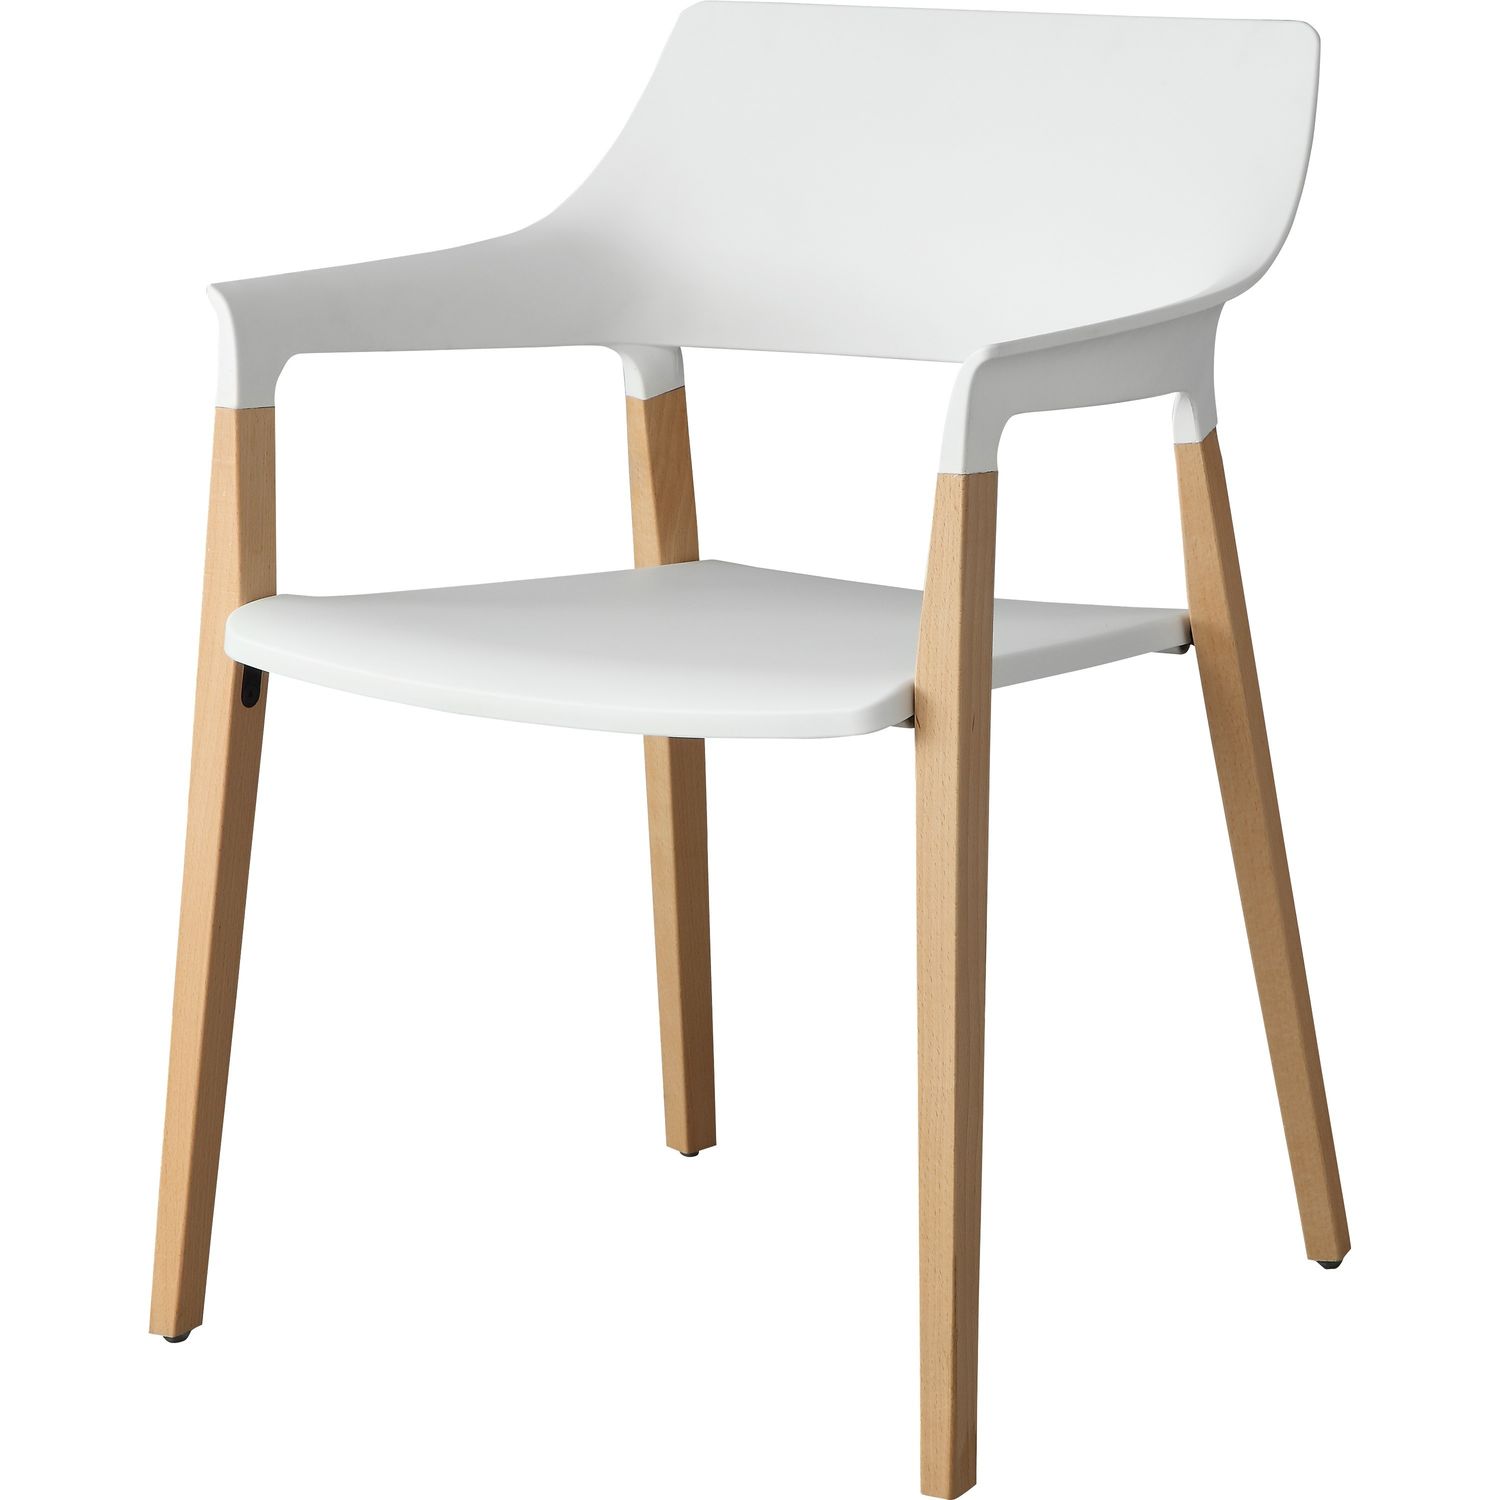 Wood Legs Stack Chairs Plastic Seat, Plastic Back, Beechwood Frame, Four-legged Base, White, Wood, Plastic, Armrest, 2 / Carton